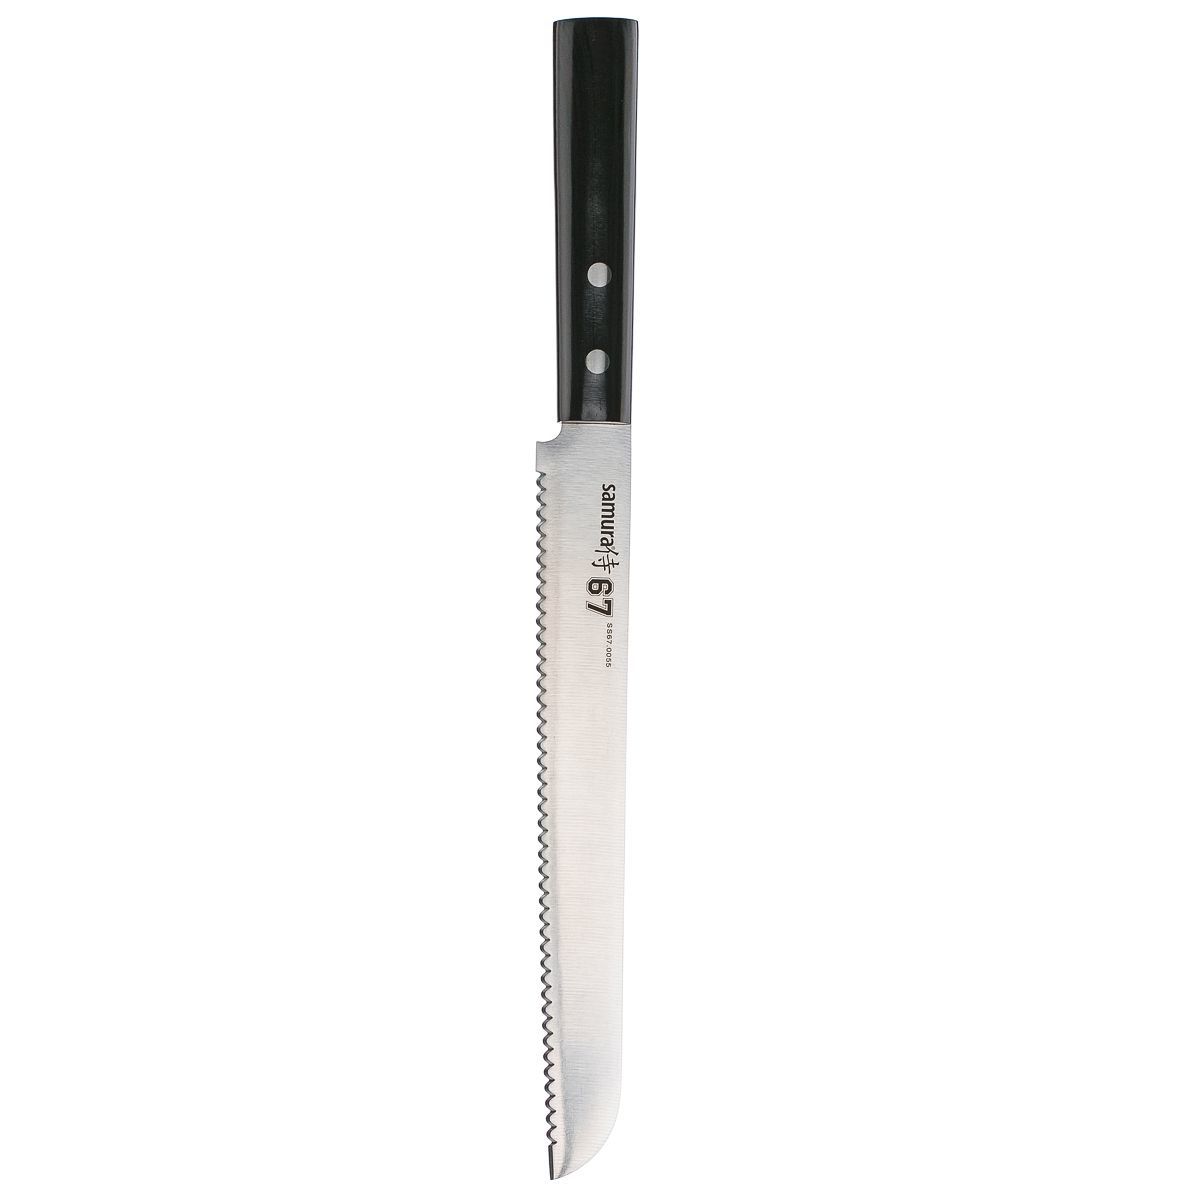 Нож для хлеба Samura 67 SS67-0055, сталь AUS-8, рукоять ABS пластик - фото 4